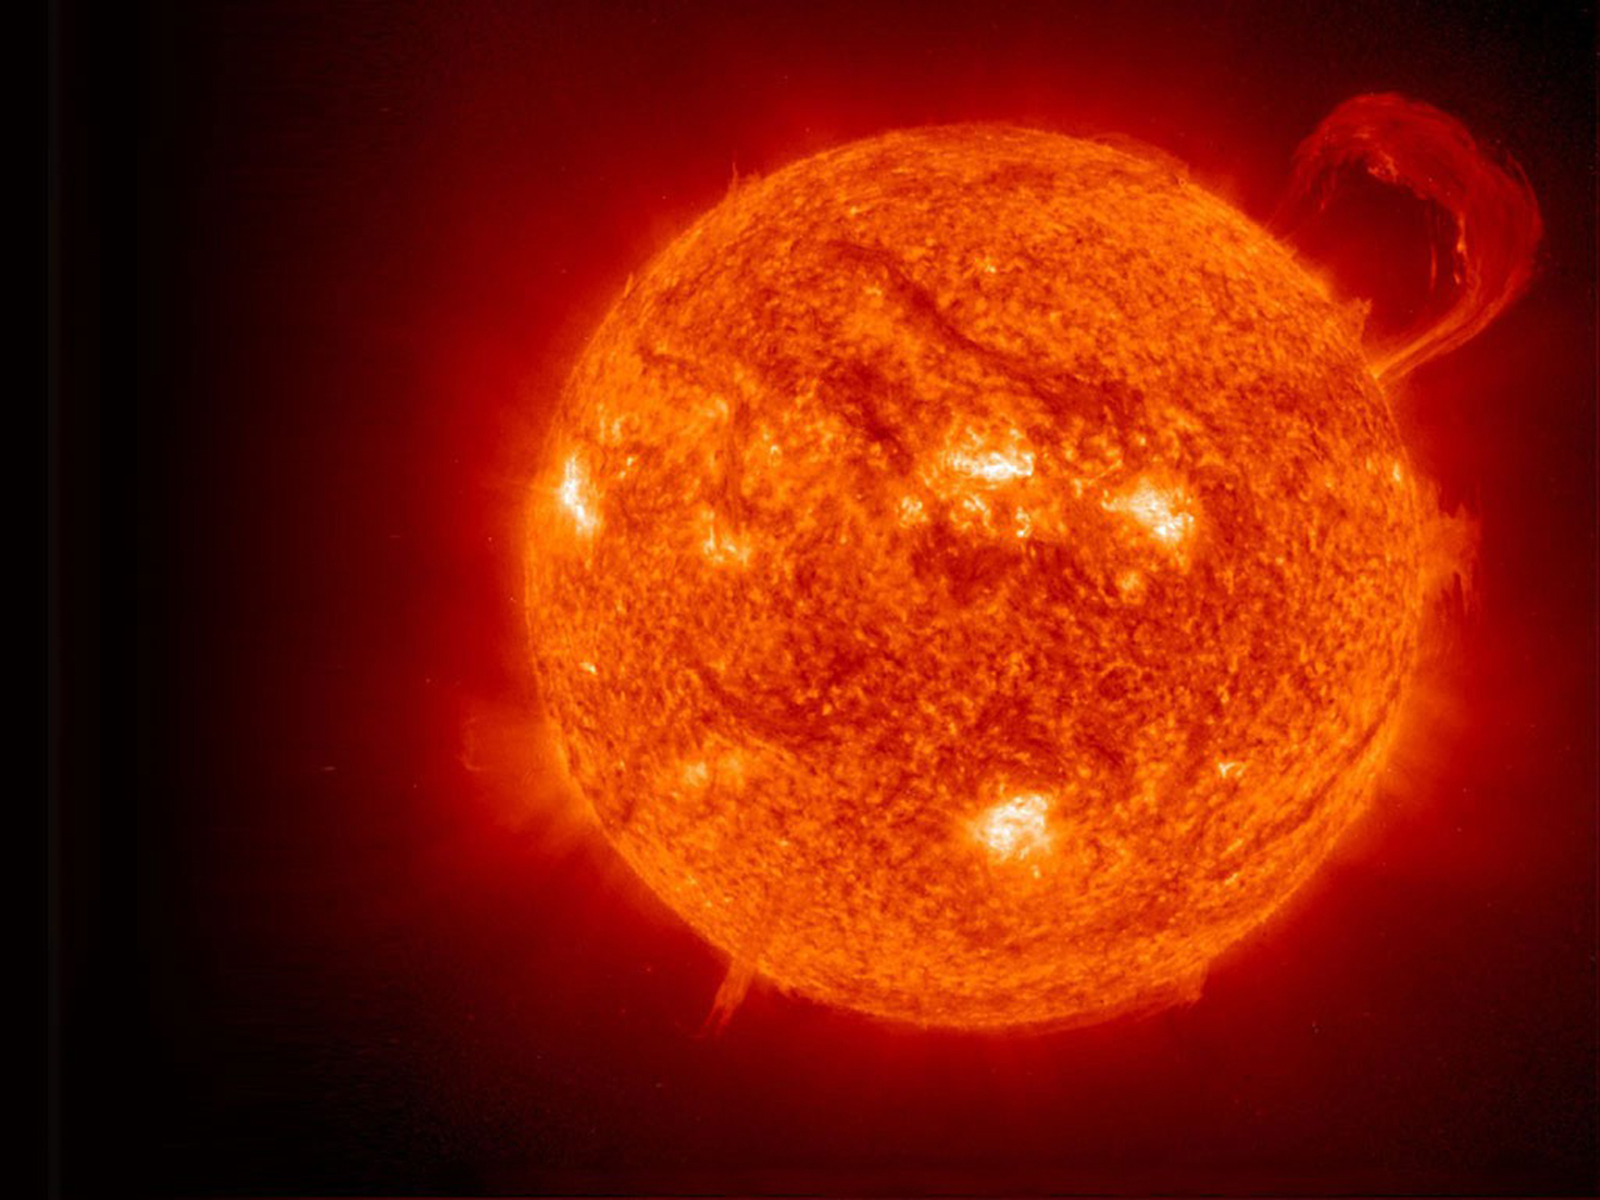 http://3.bp.blogspot.com/-n42Dfe8eHbE/Td3rJSeNvgI/AAAAAAAAAVQ/gJZOnUX7hDI/s1600/burning_sun-normal.jpg